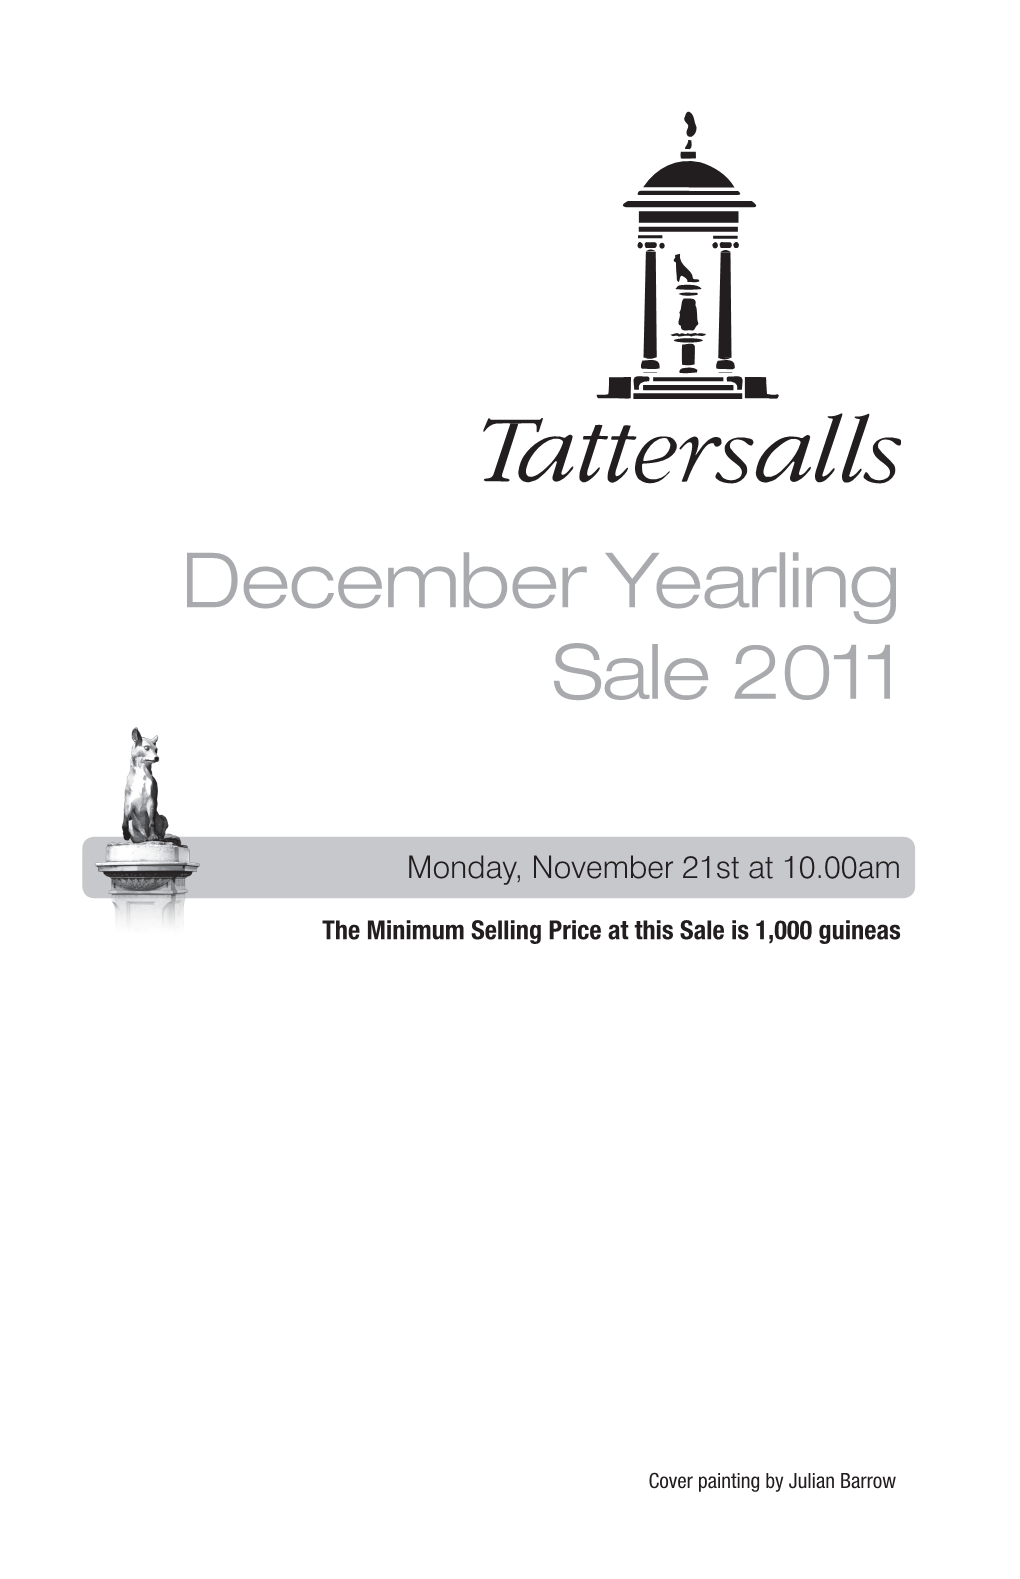 Tattersalls December Yearling Sale